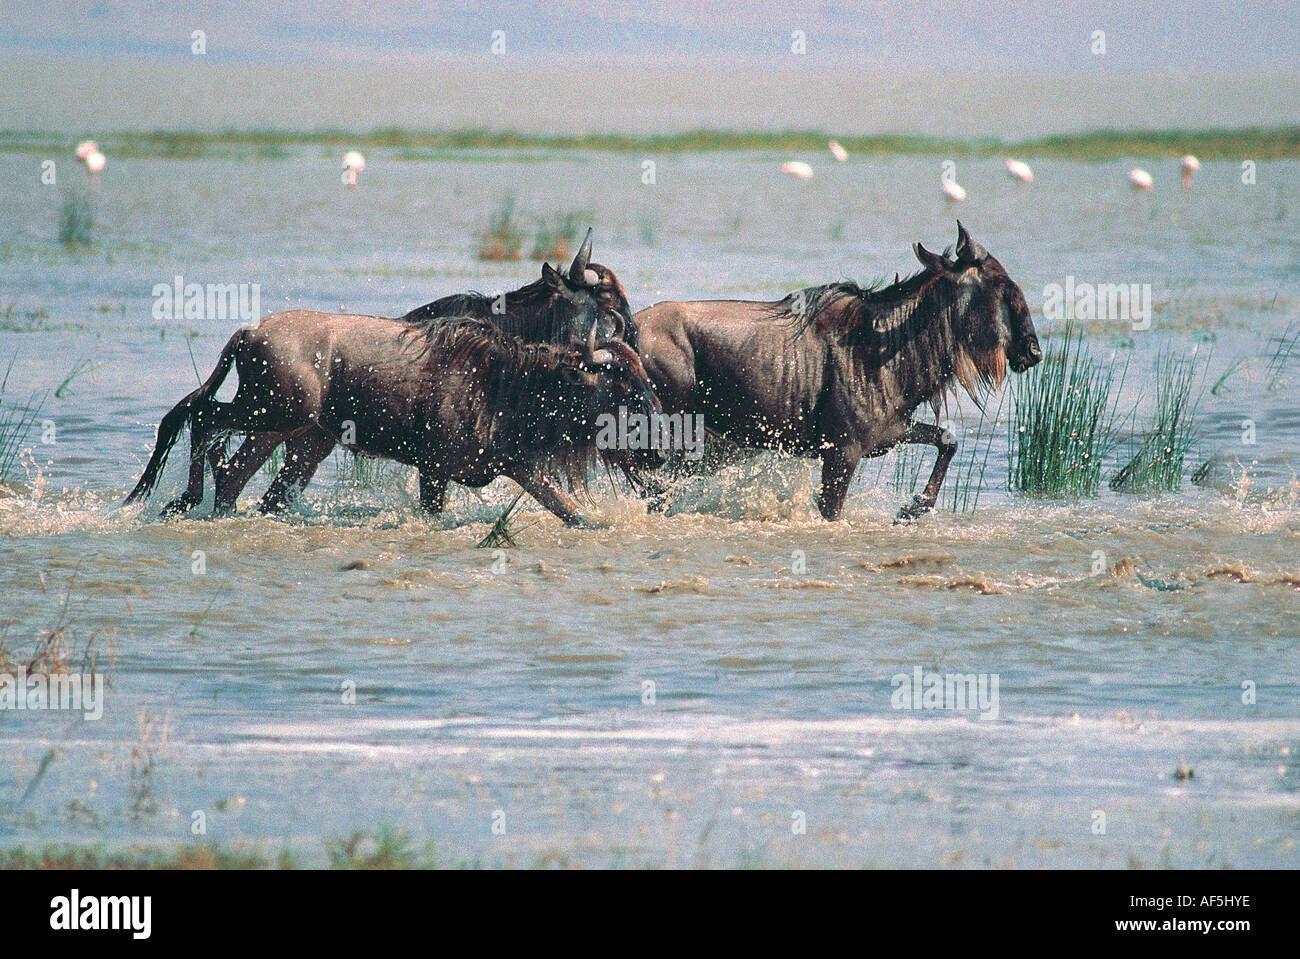 Wildebeest galloping through the shallow water of Lake Magadi in the Ngorongoro Crater Tanzania East Africa Stock Photo